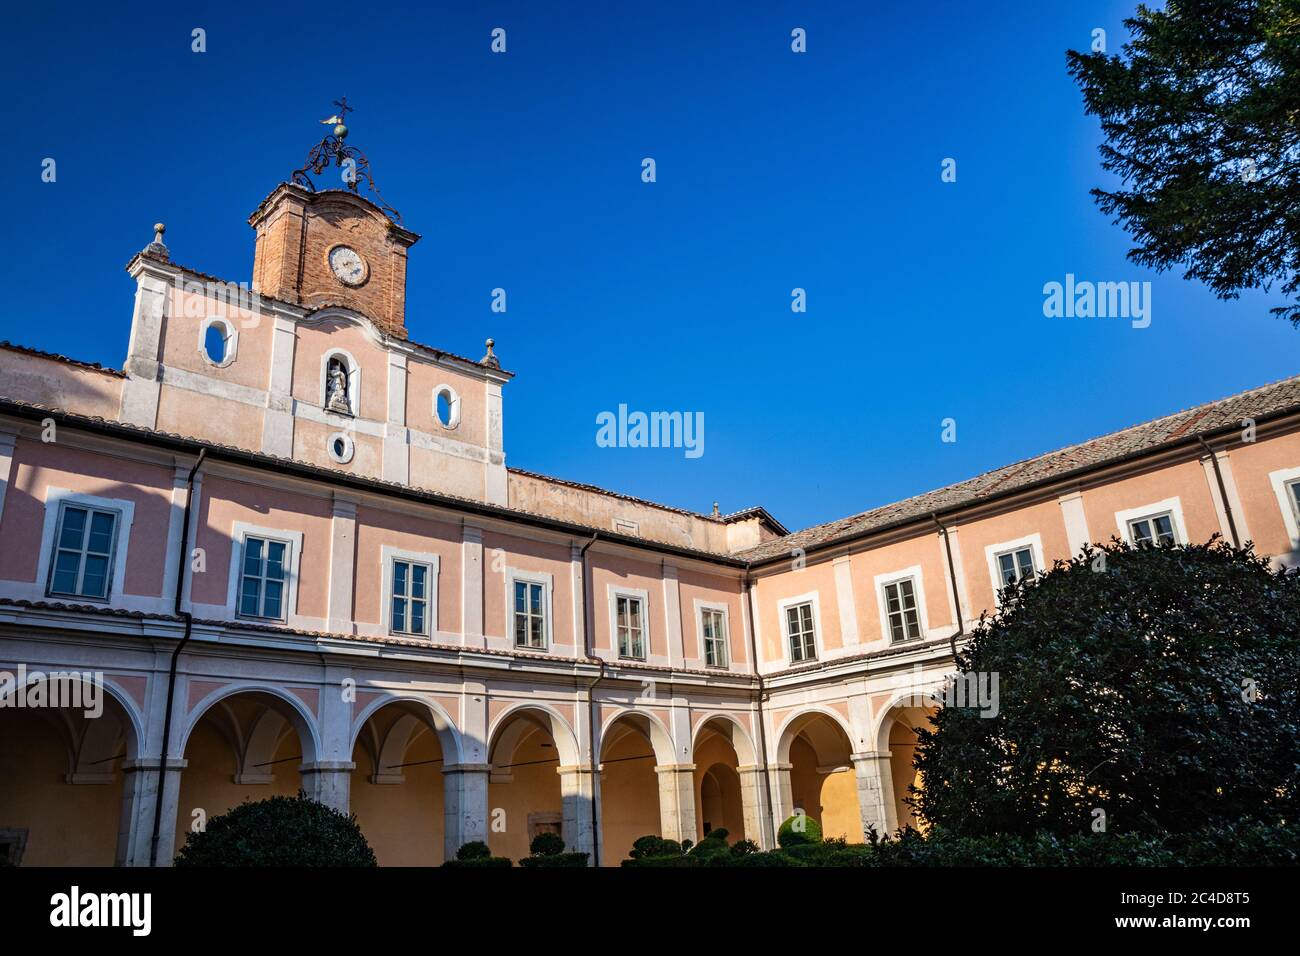 March 24, 2019 - Collepardo, Frosinone, Lazio, Italy - Trisulti Charterhouse, Carthusian monastery. The courtyard of the abbey, with the porch, the wi Stock Photo